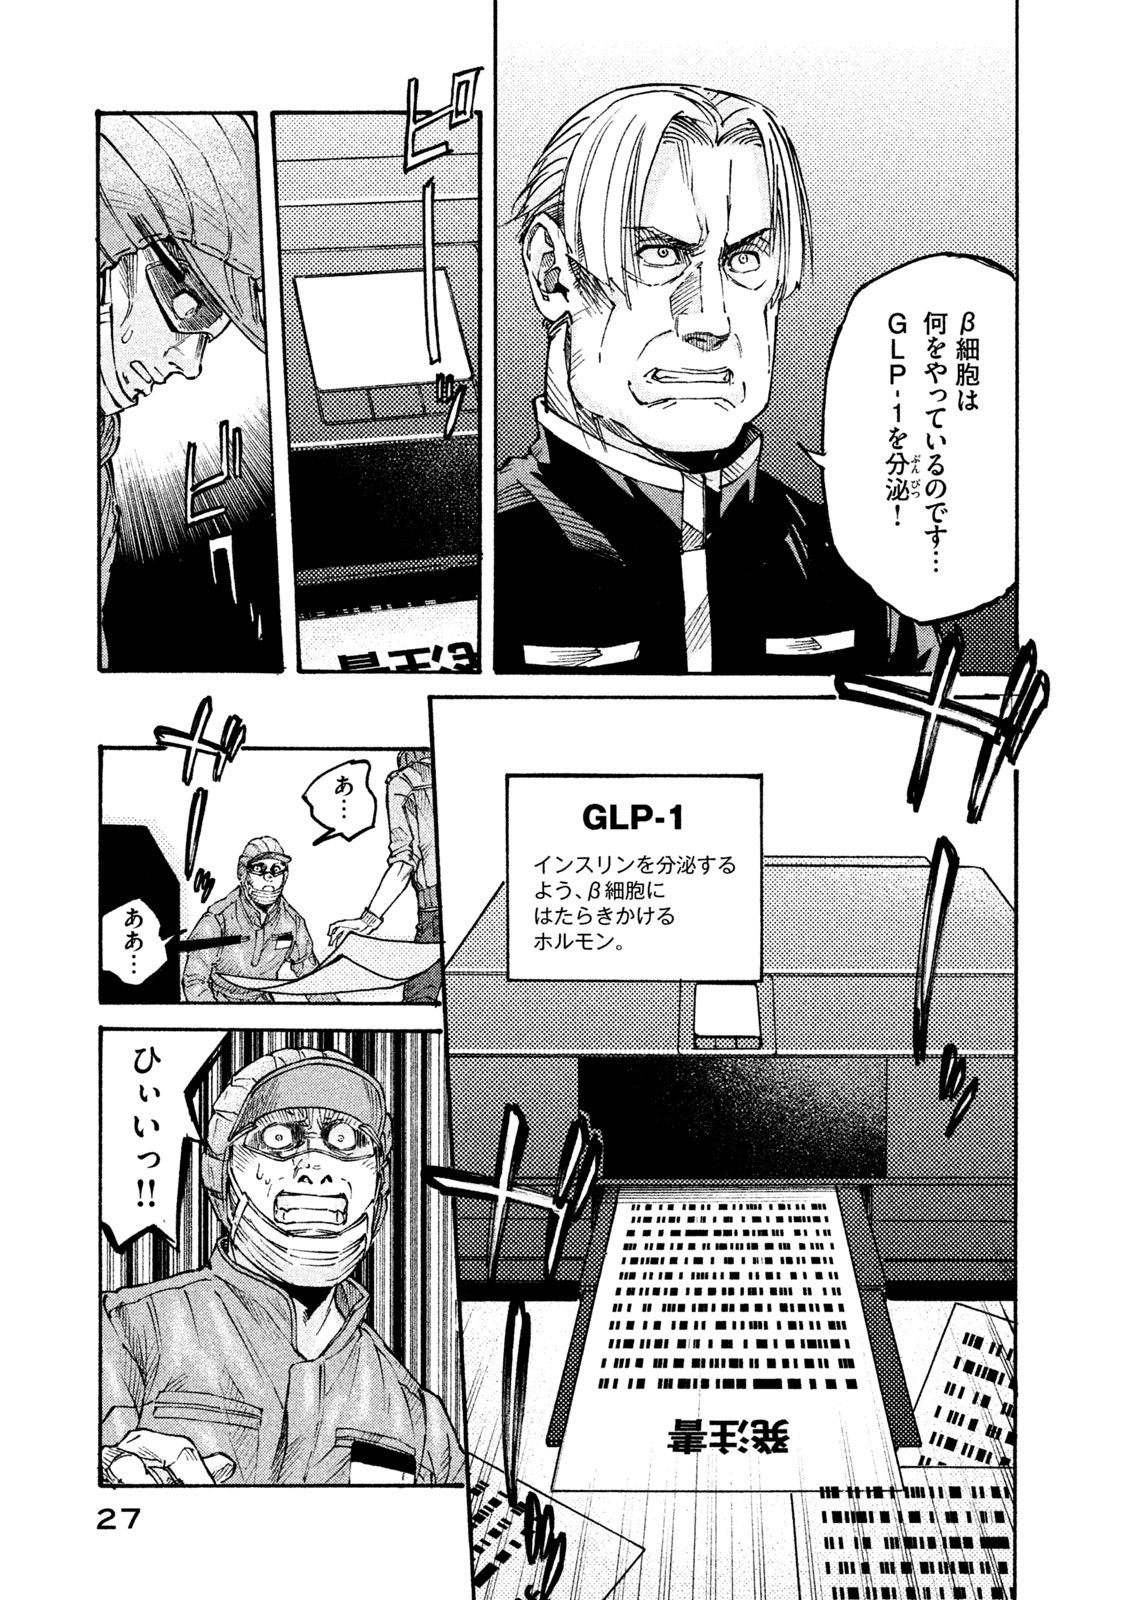 Hataraku Saibou BLACK - Chapter 19 - Page 6